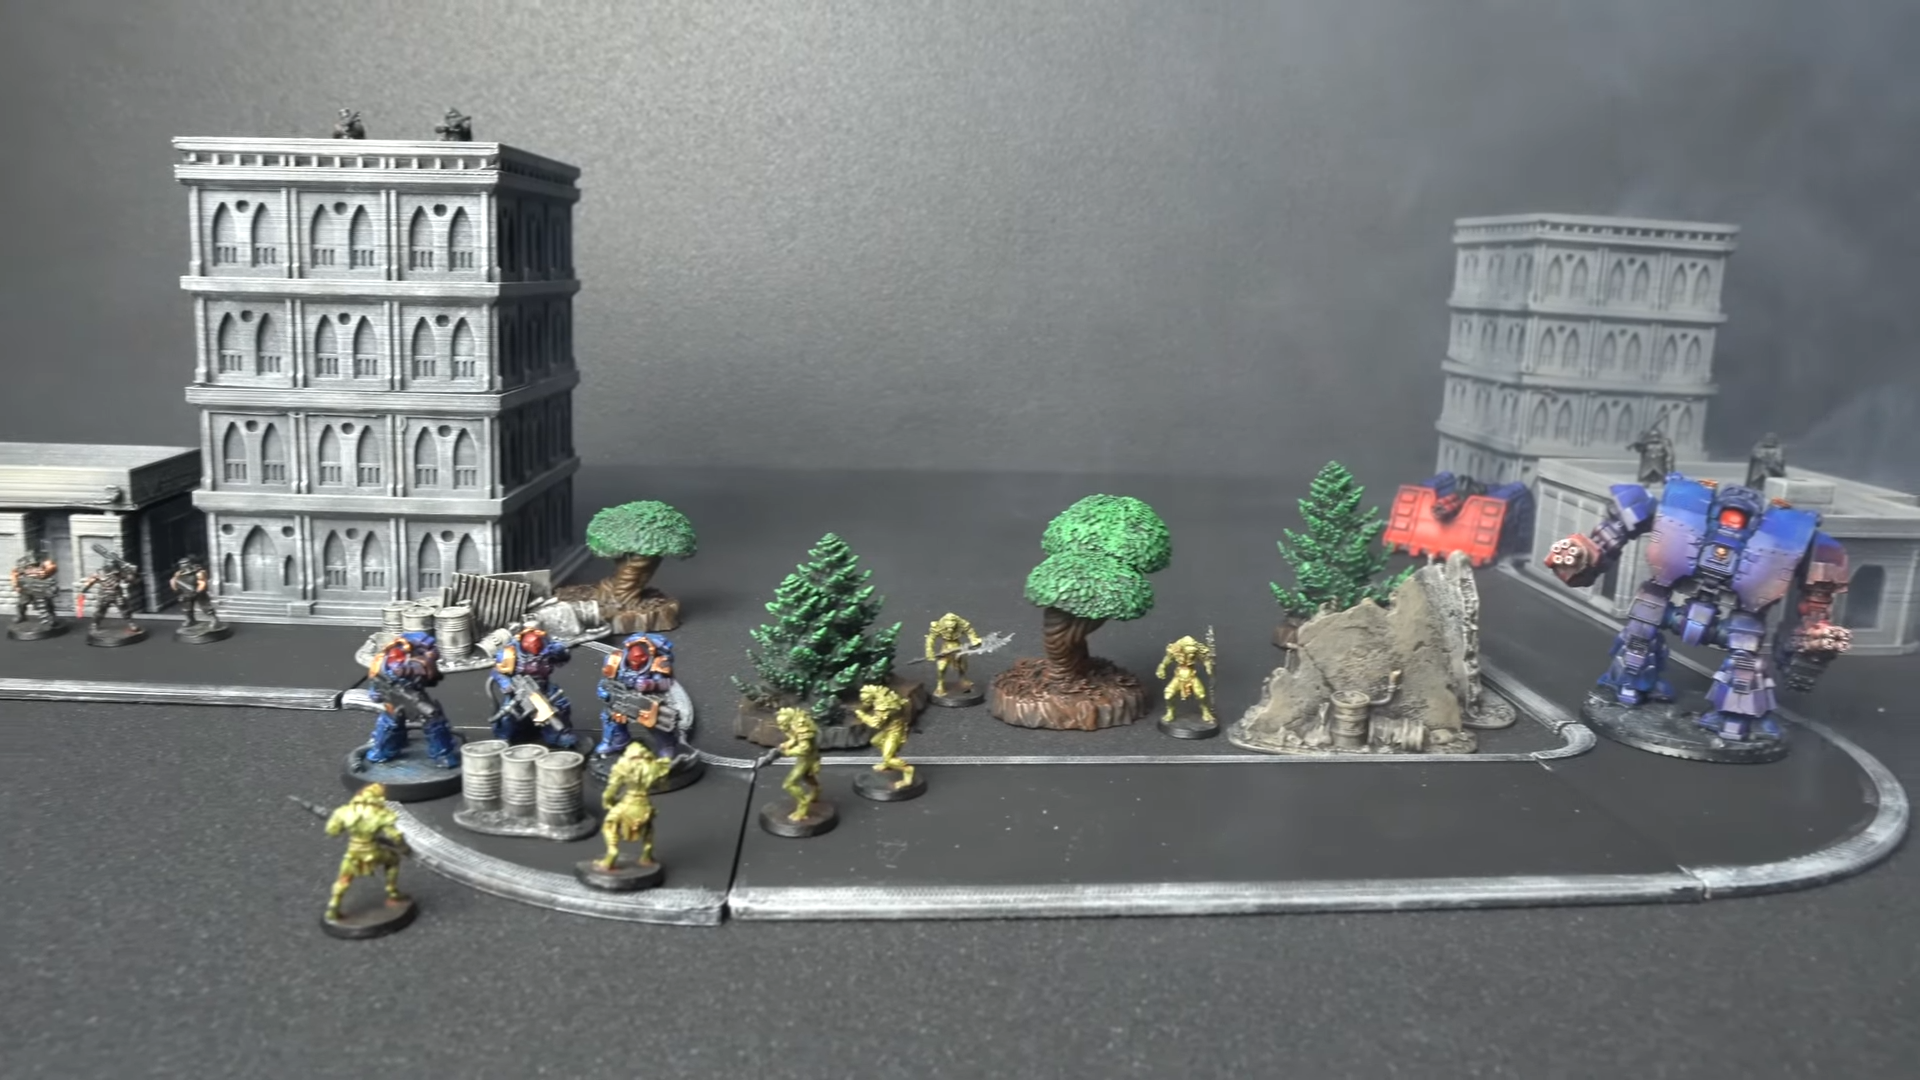 3D Printed Wargaming inspired diorama